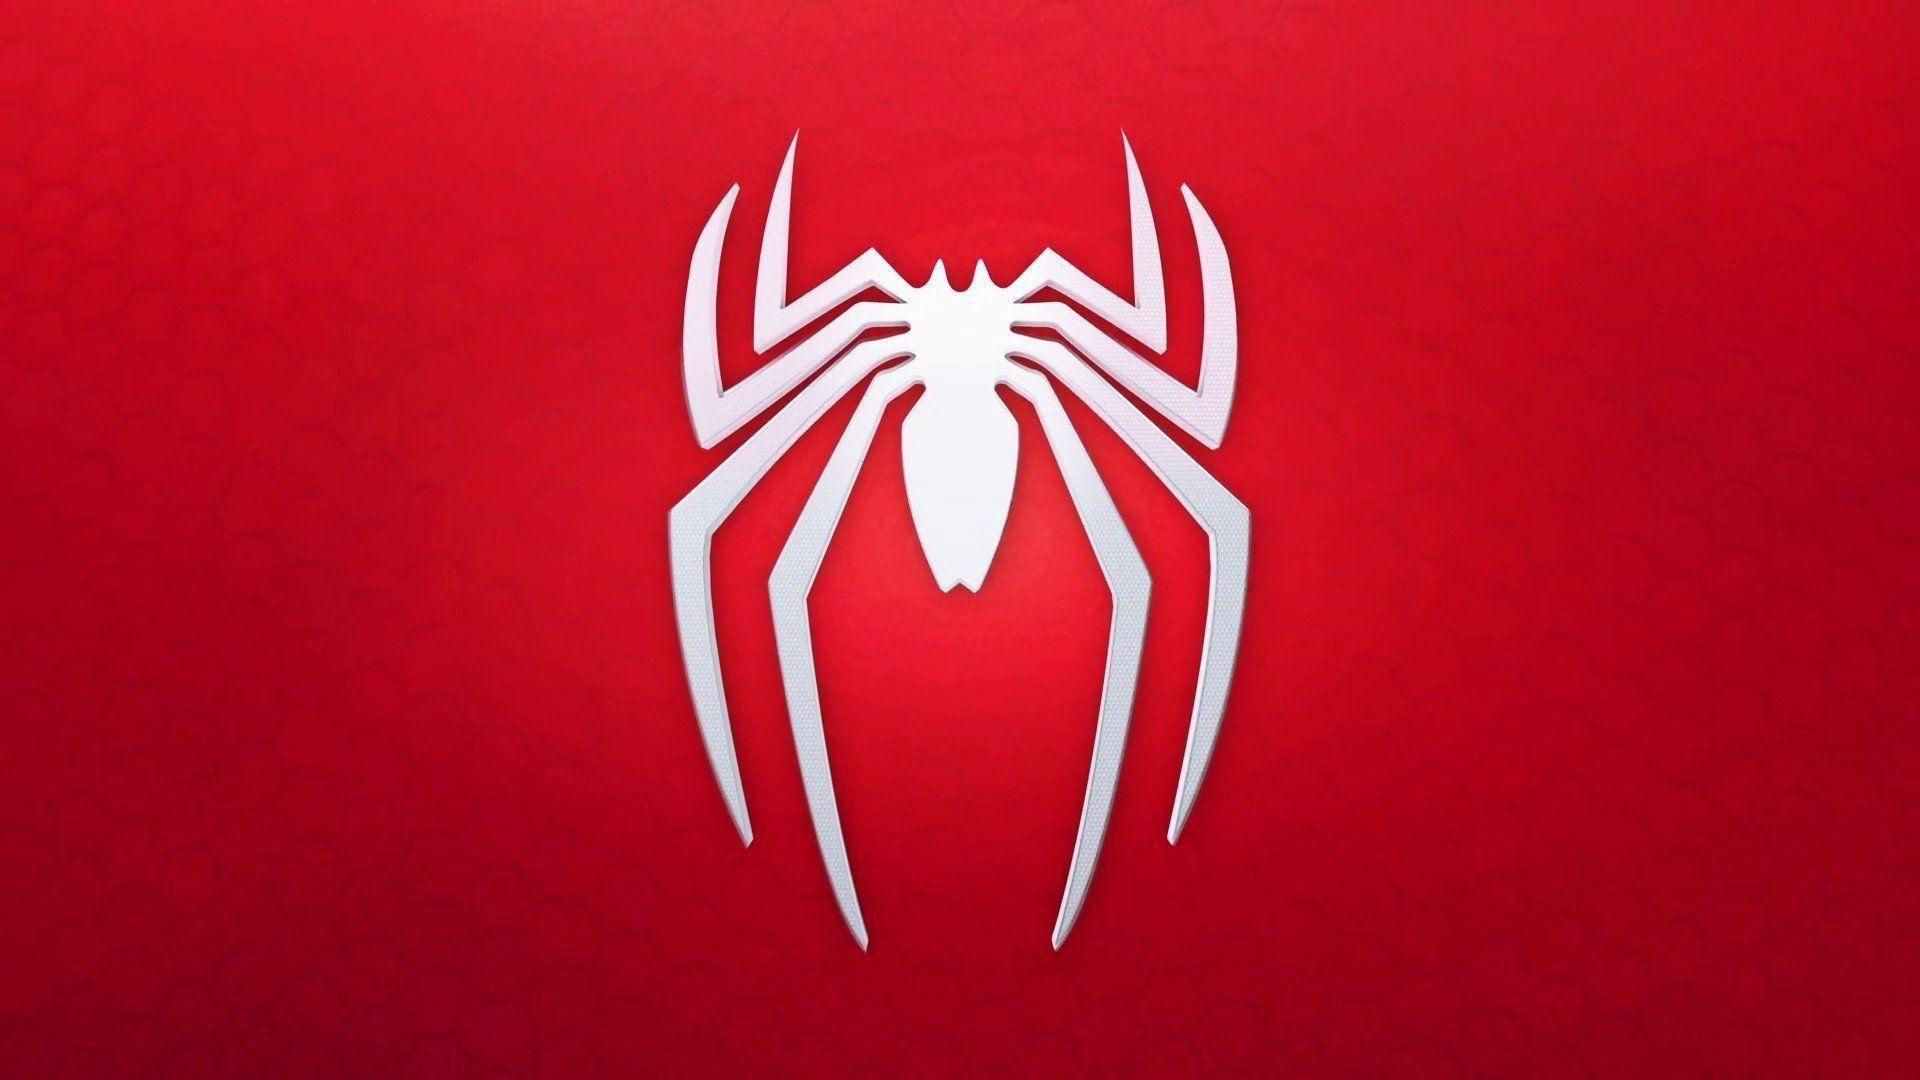 Games Like Spider Man for PS4 2019. Hero wallpaper